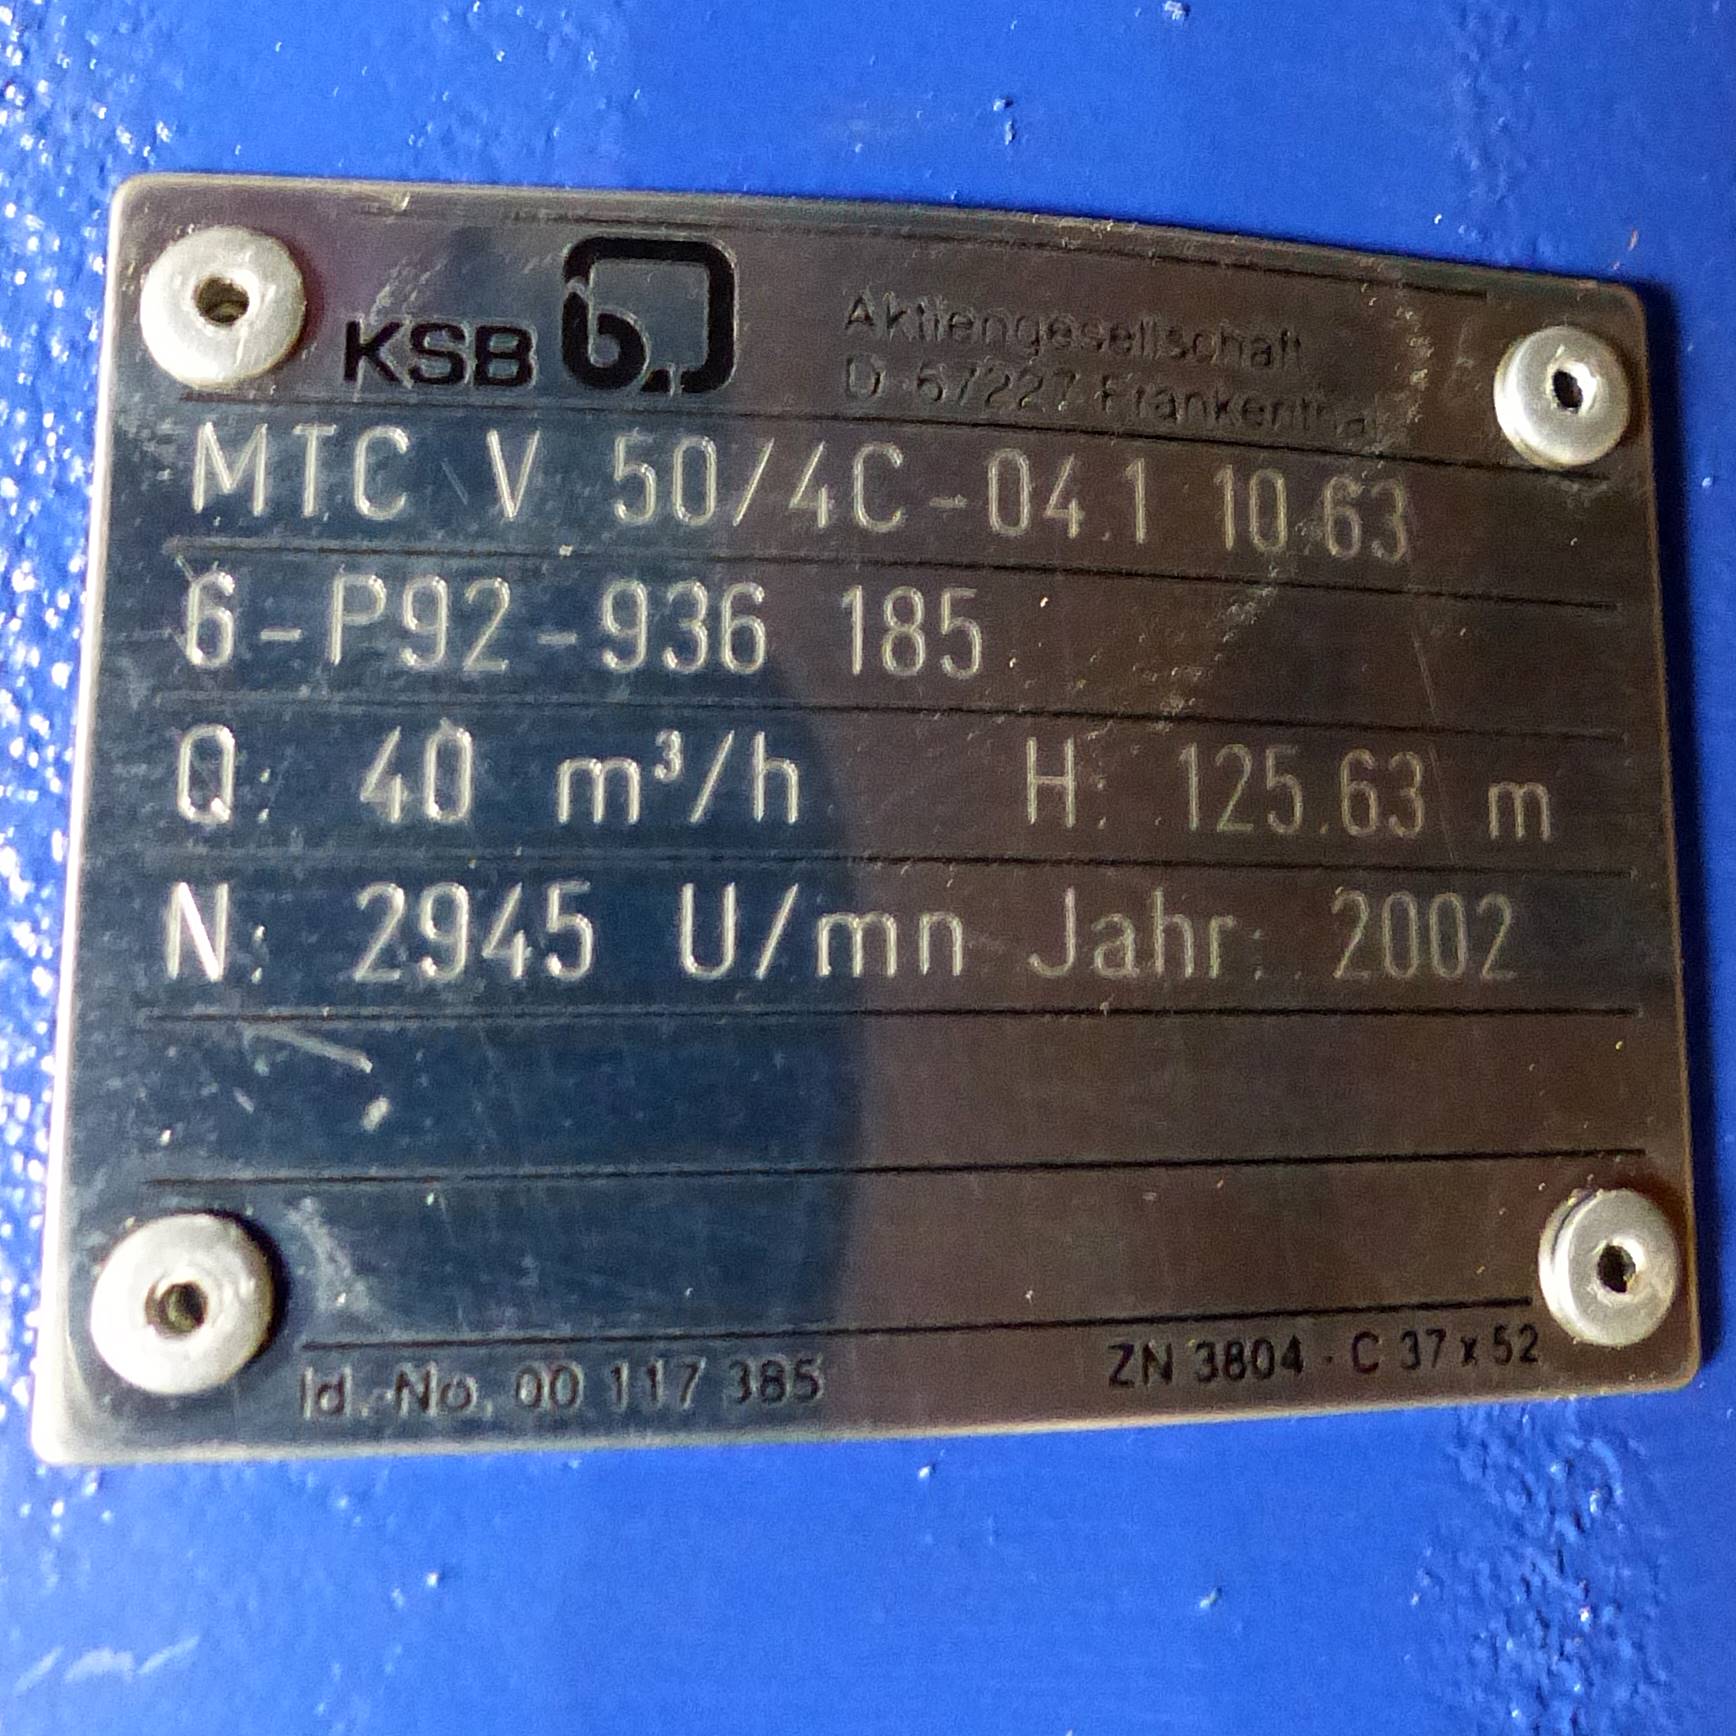 Centrifugal Pump ILG4 205-2AA66-Z 